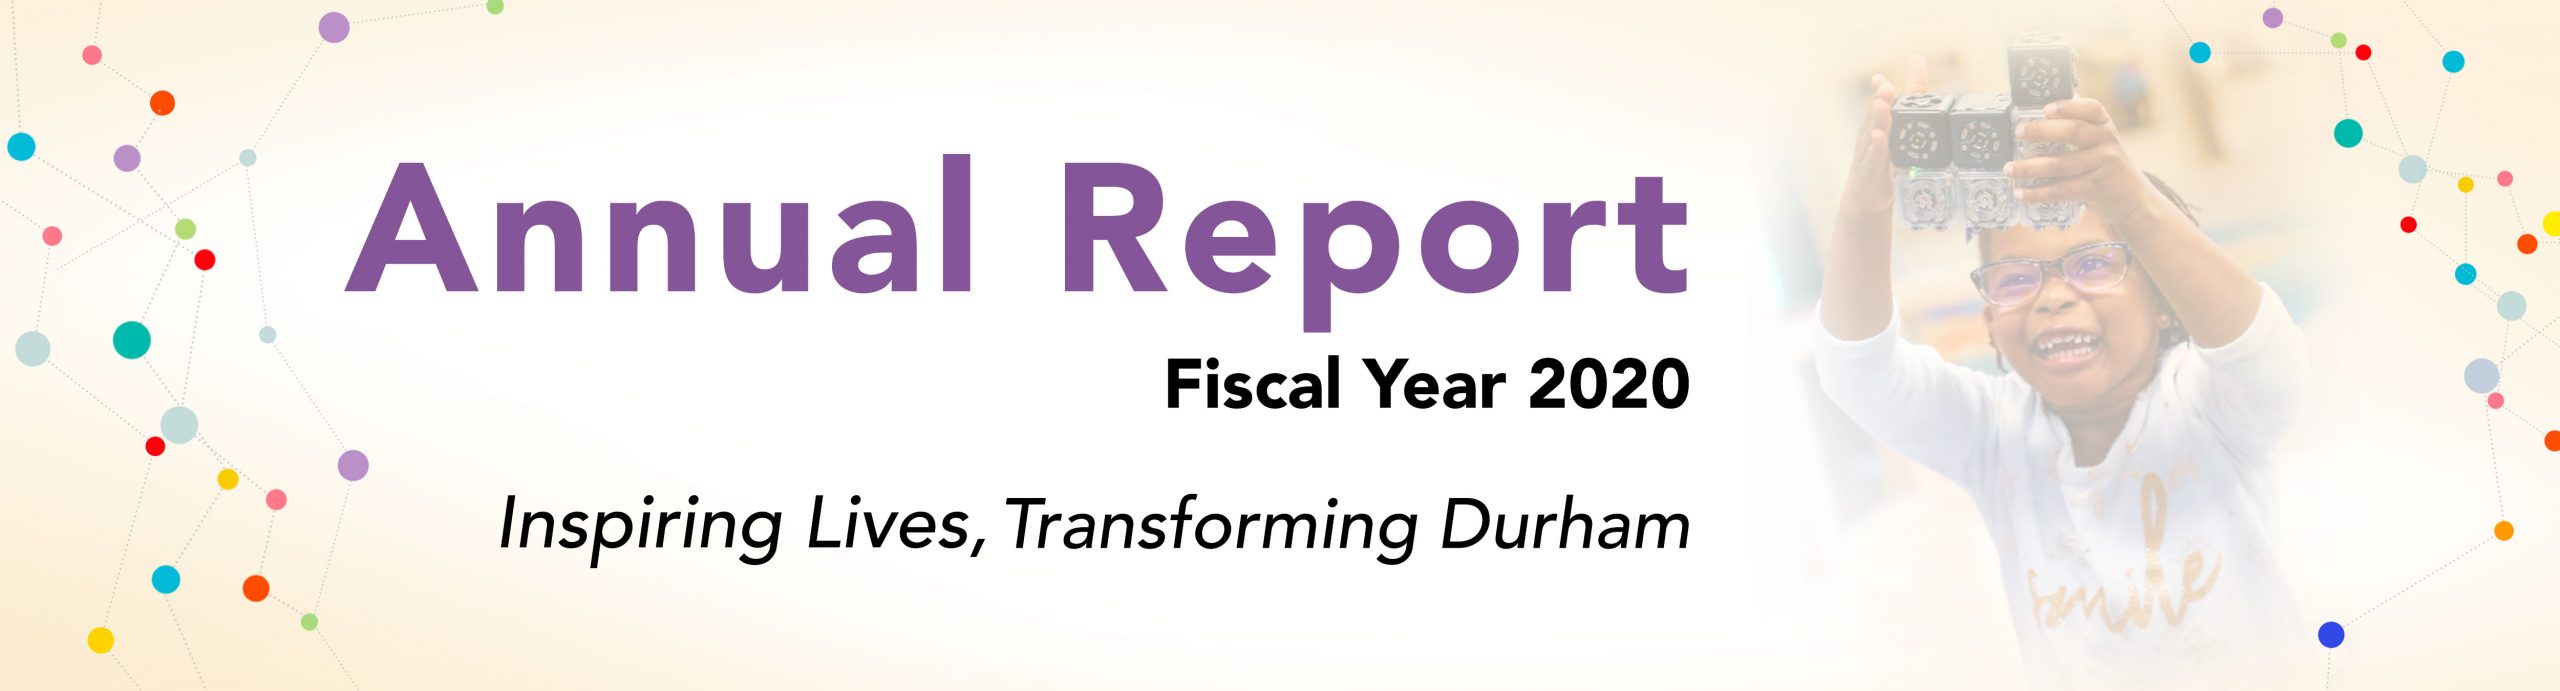 Annual Report Header